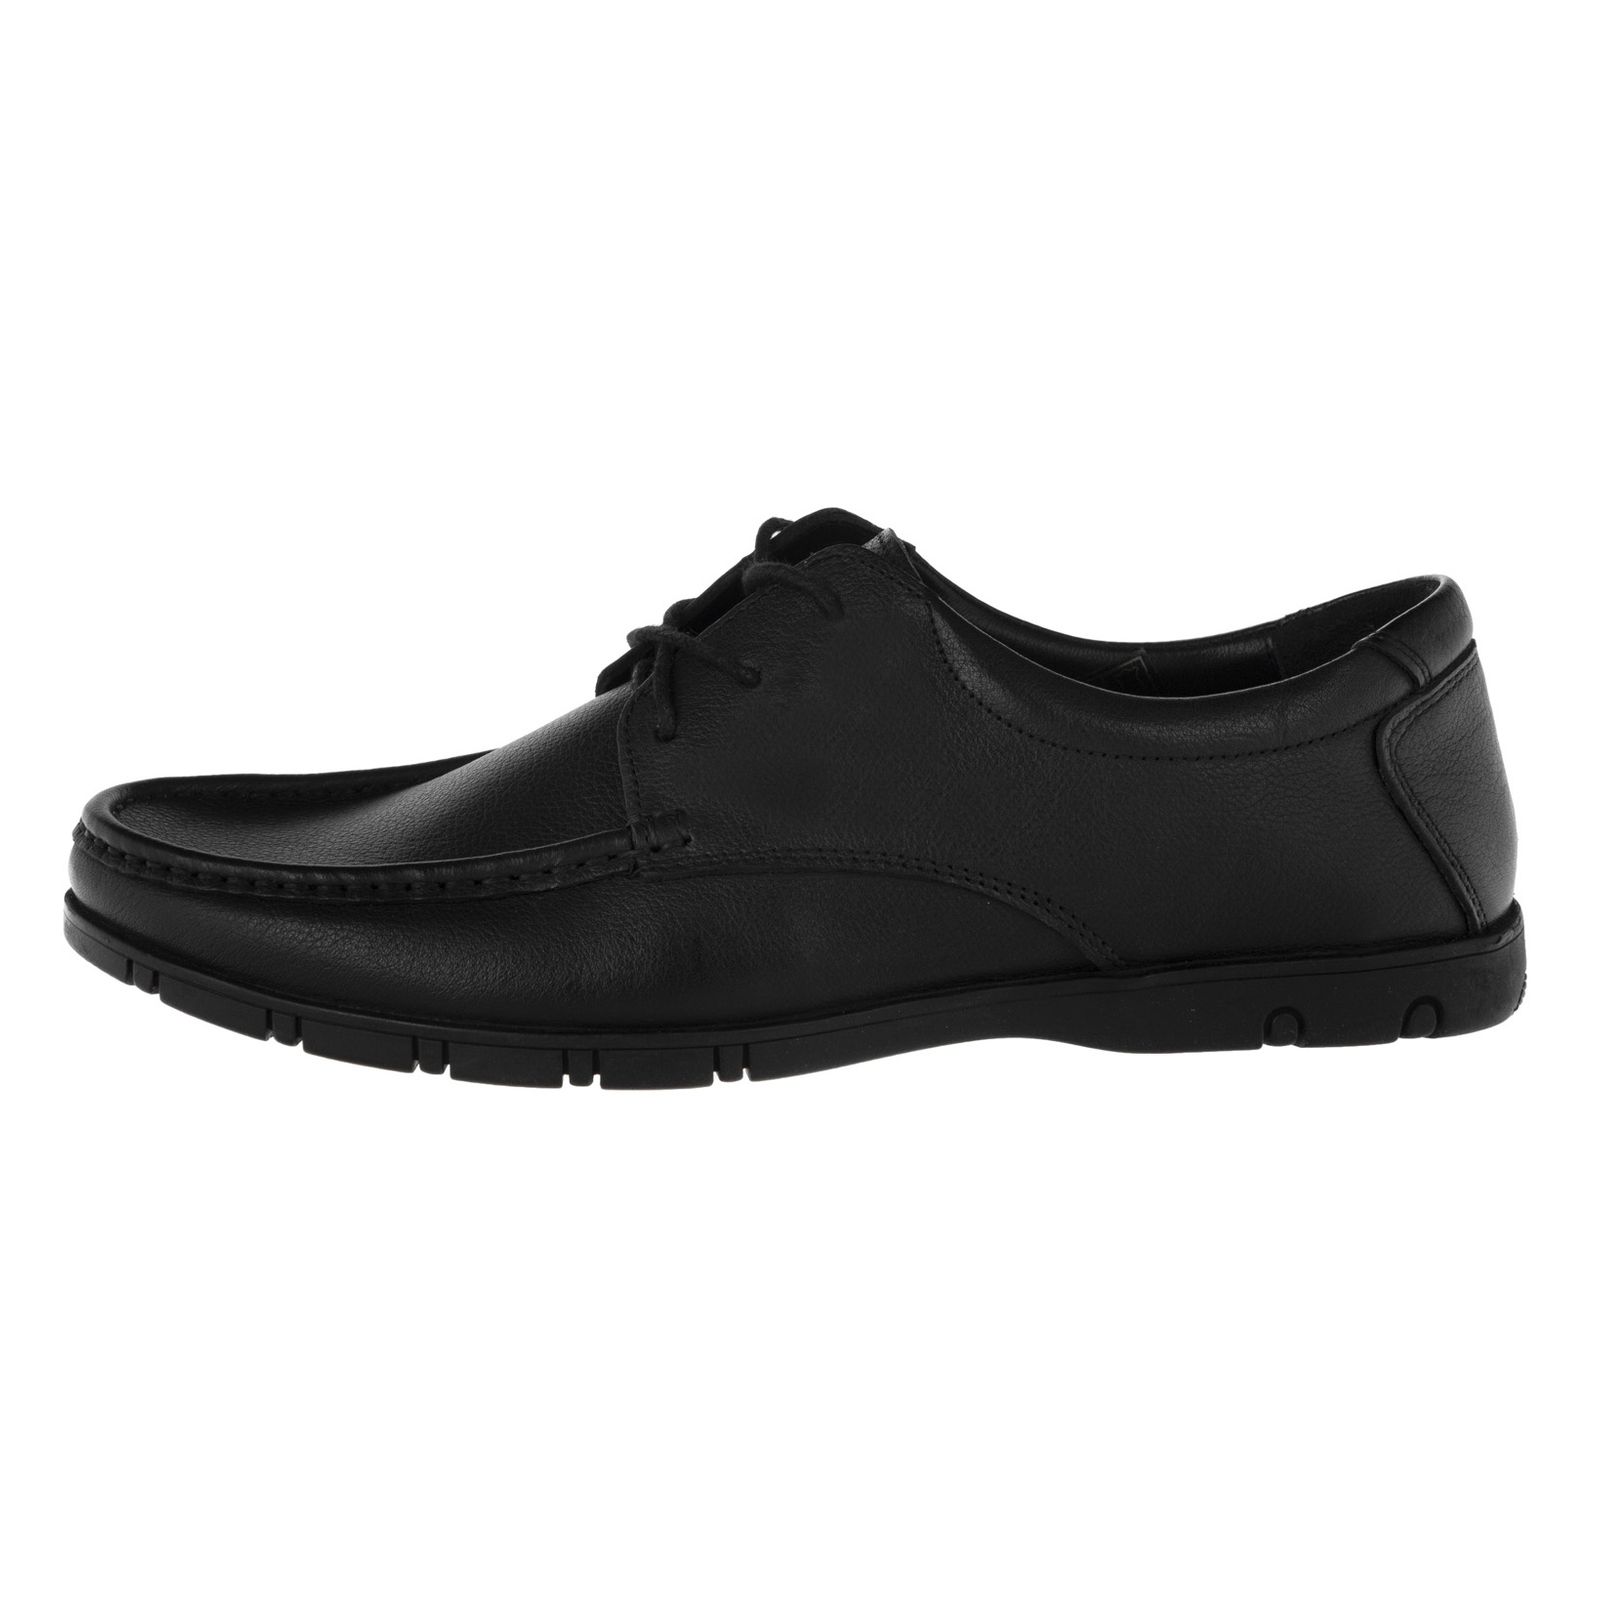 کفش روزمره مردانه فلوگارت مدل 100317181-101 - مشکی - 2